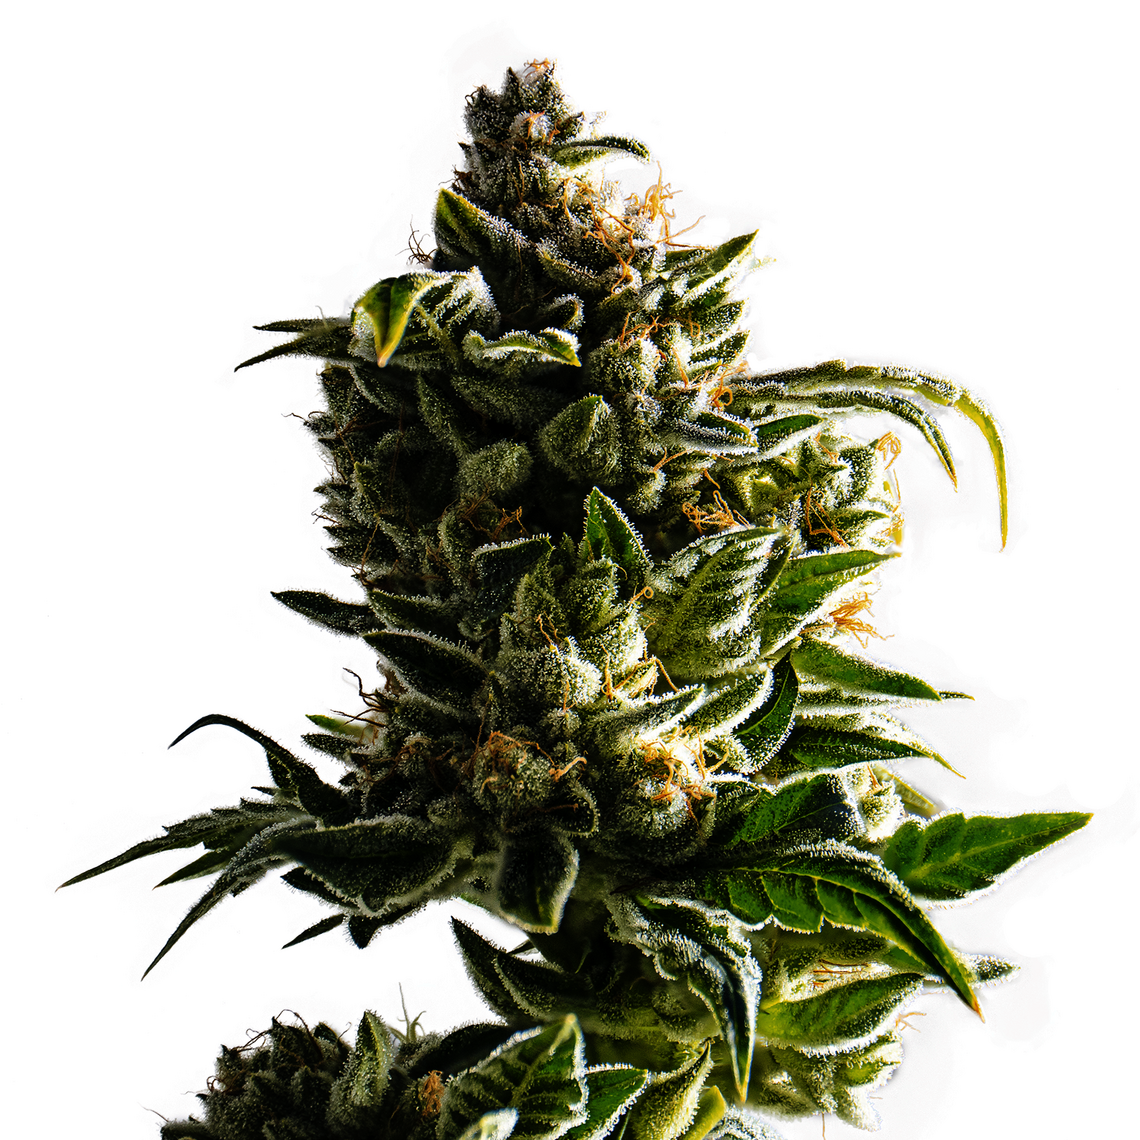 Close-up of a cannabis flower.